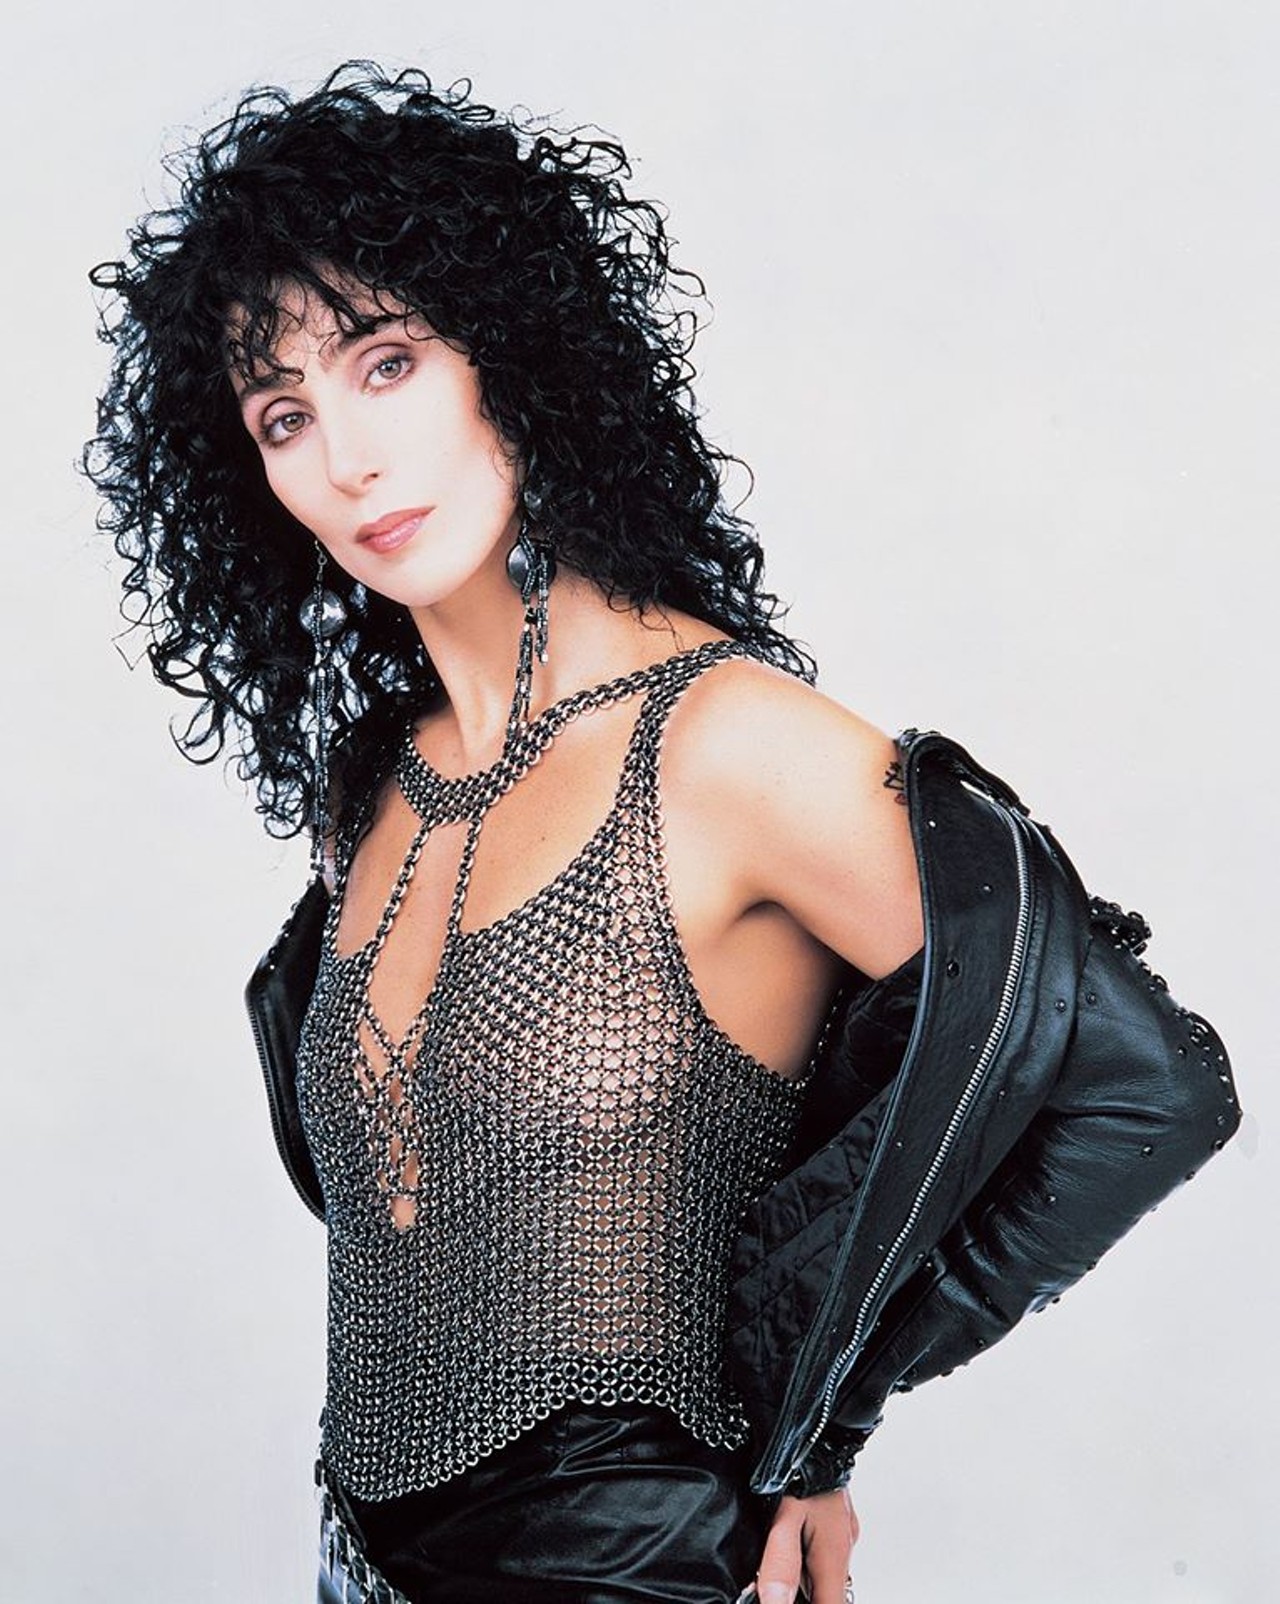 Yassssssss! '80s leather Cher with the curly hair. Okurrrrrt?!
Photo via Facebook / Cher